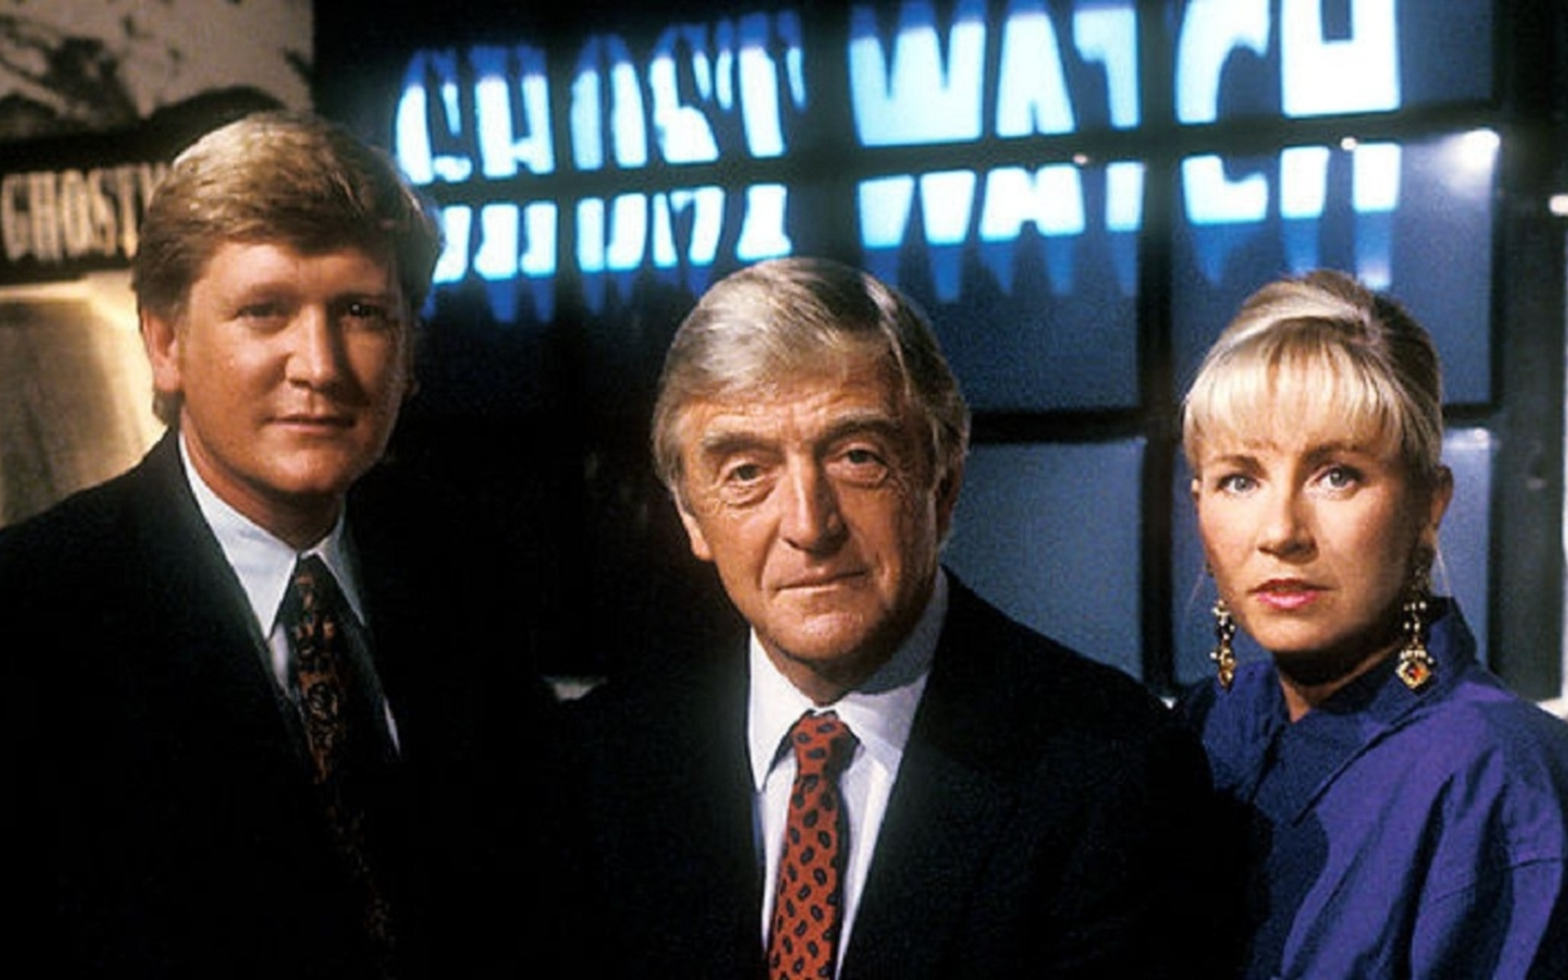 GhostWatch BBC